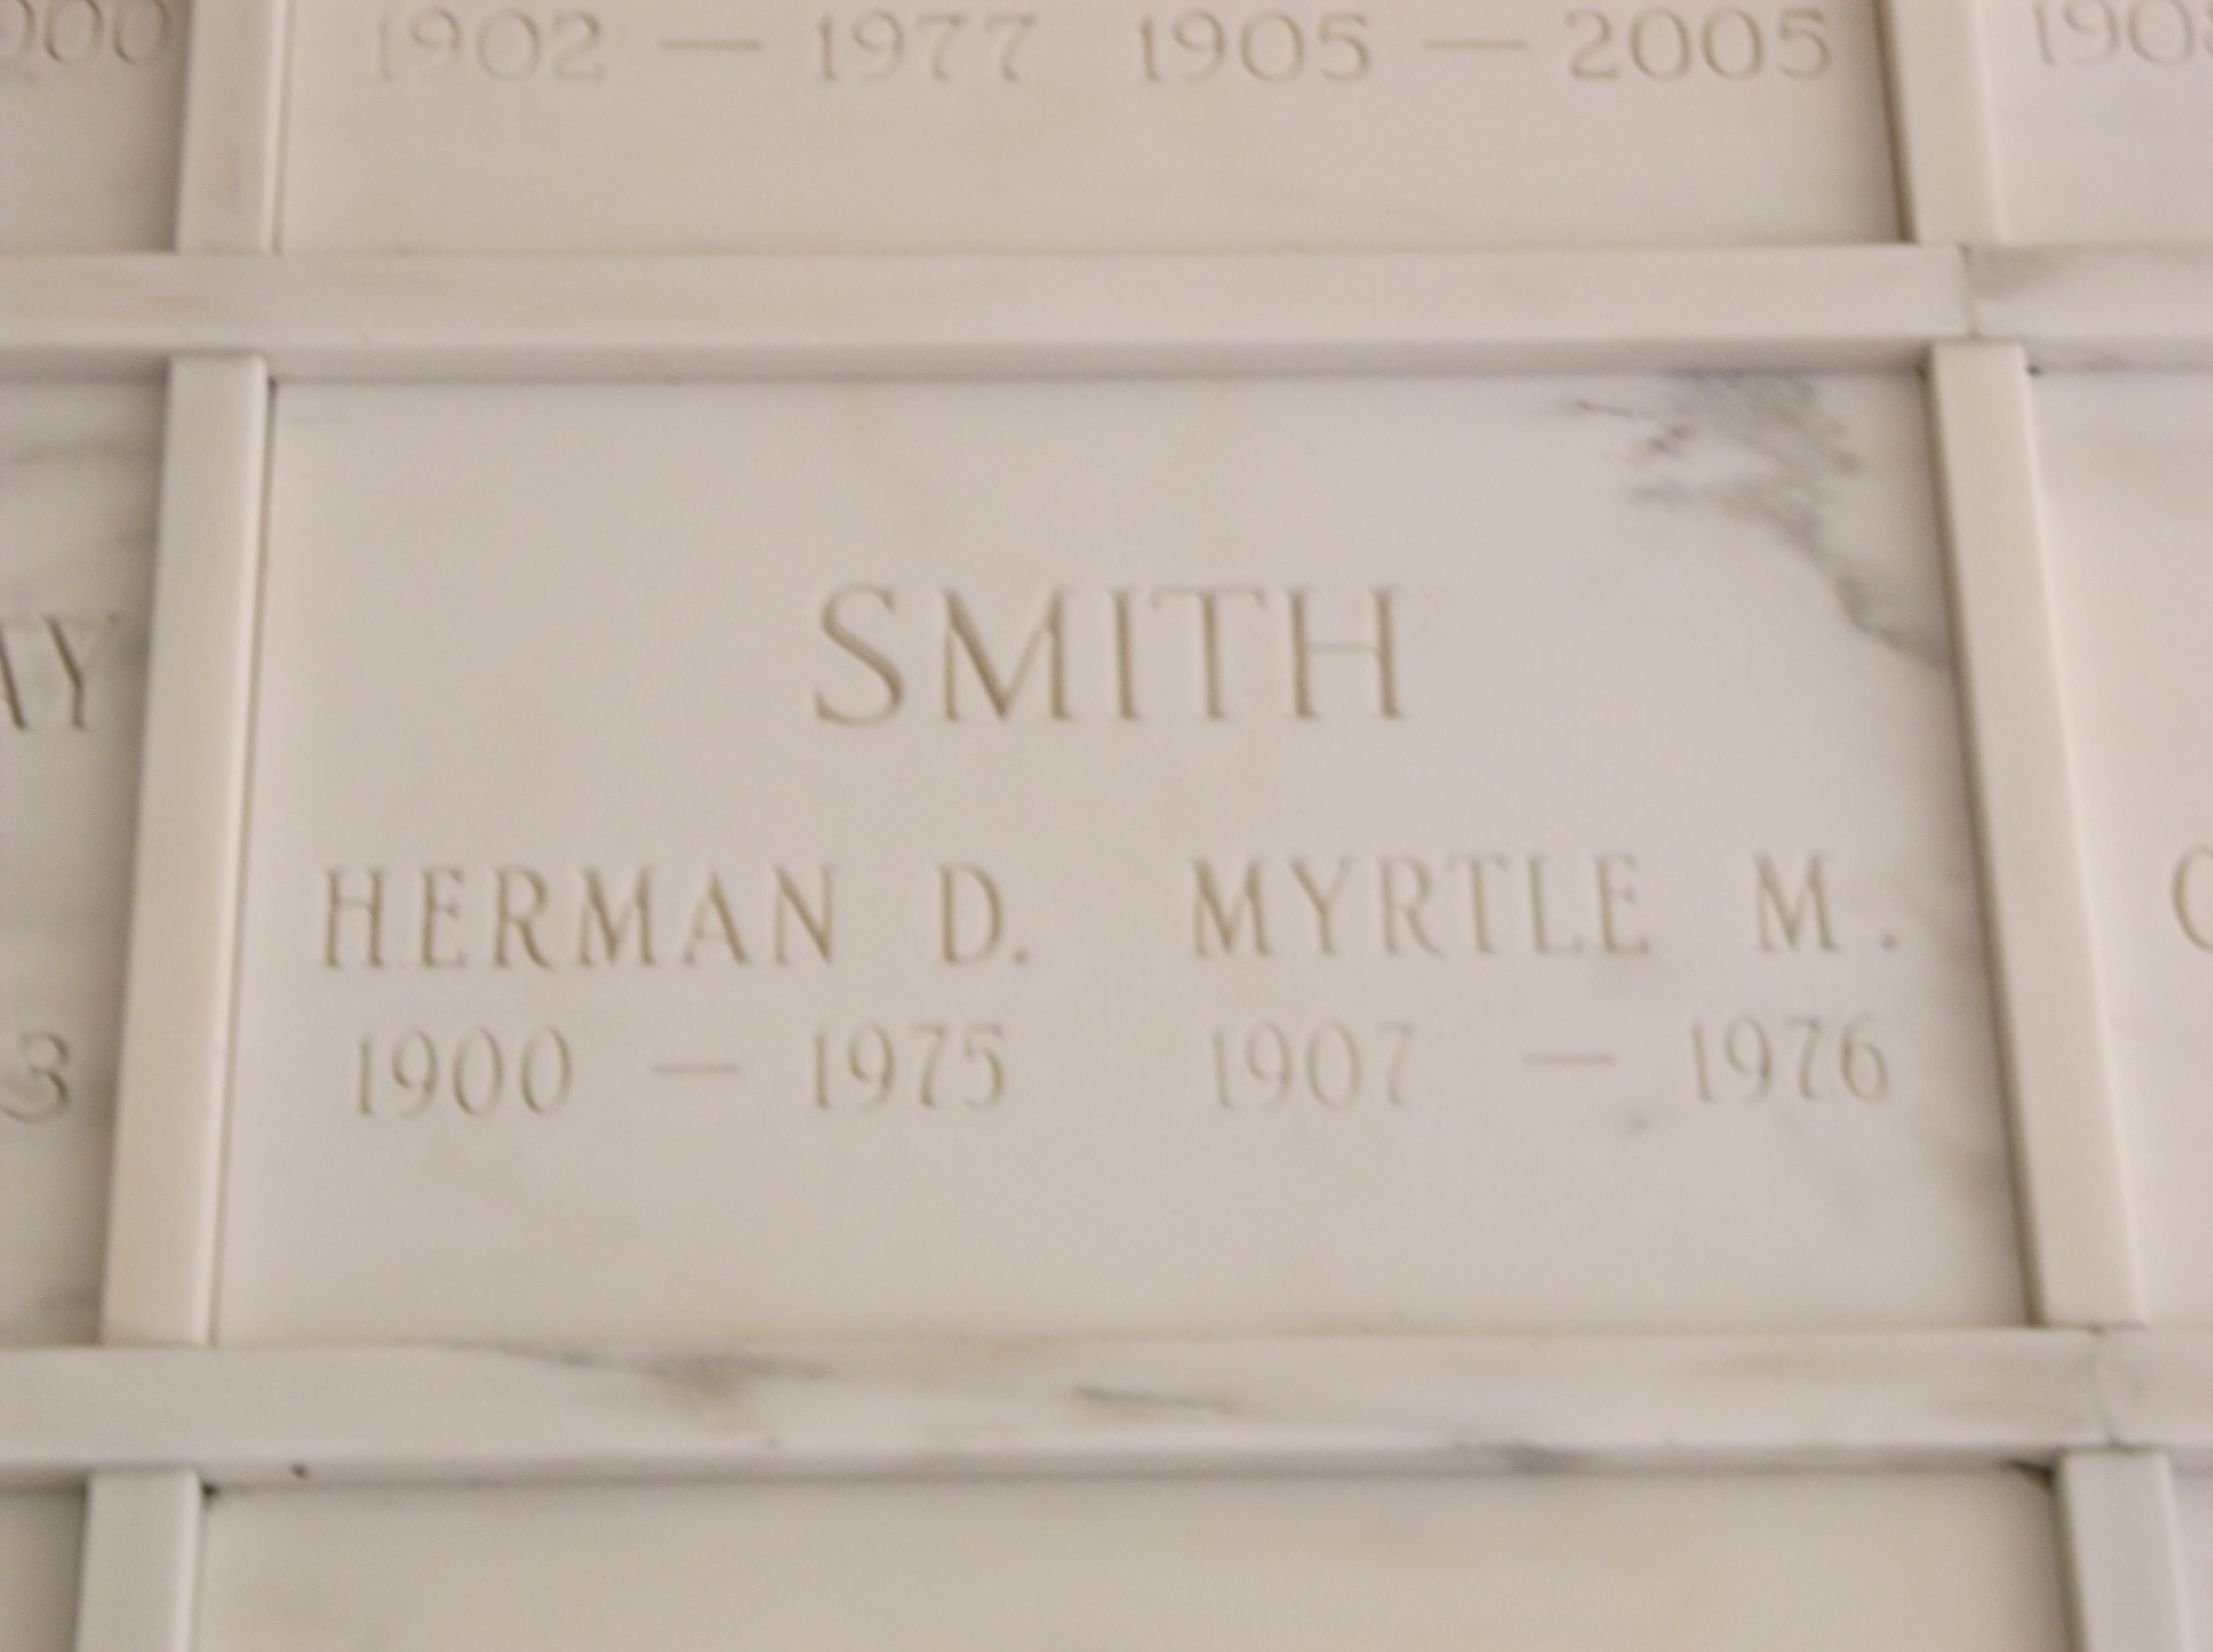 Myrtle M Smith